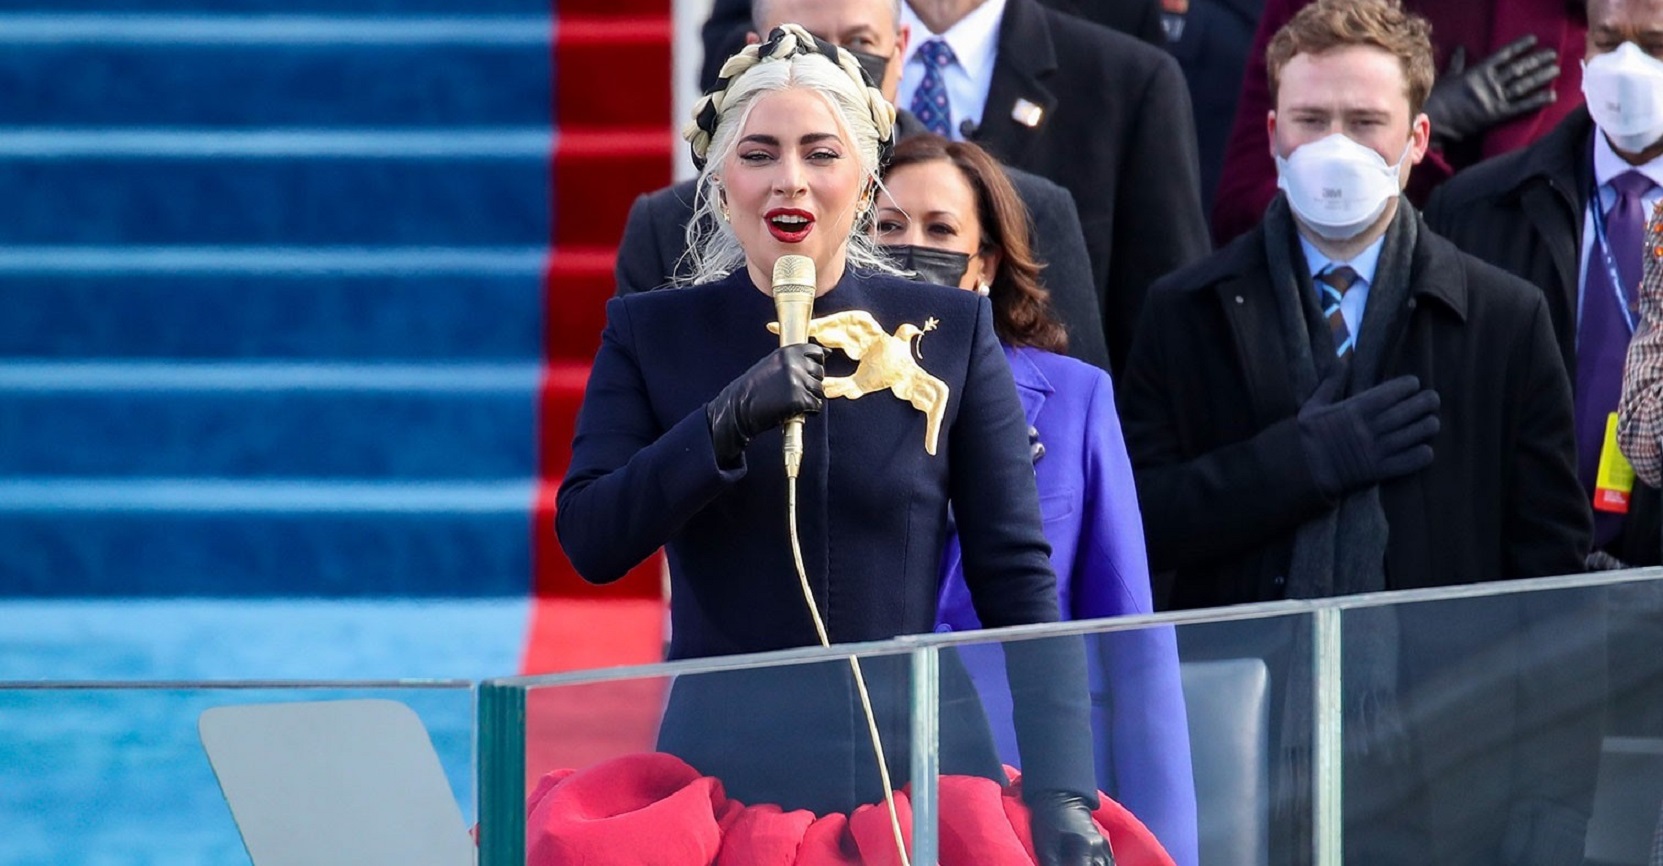 Watch: Lady Gaga’s Sensational Performance From Biden-Harris Inauguration